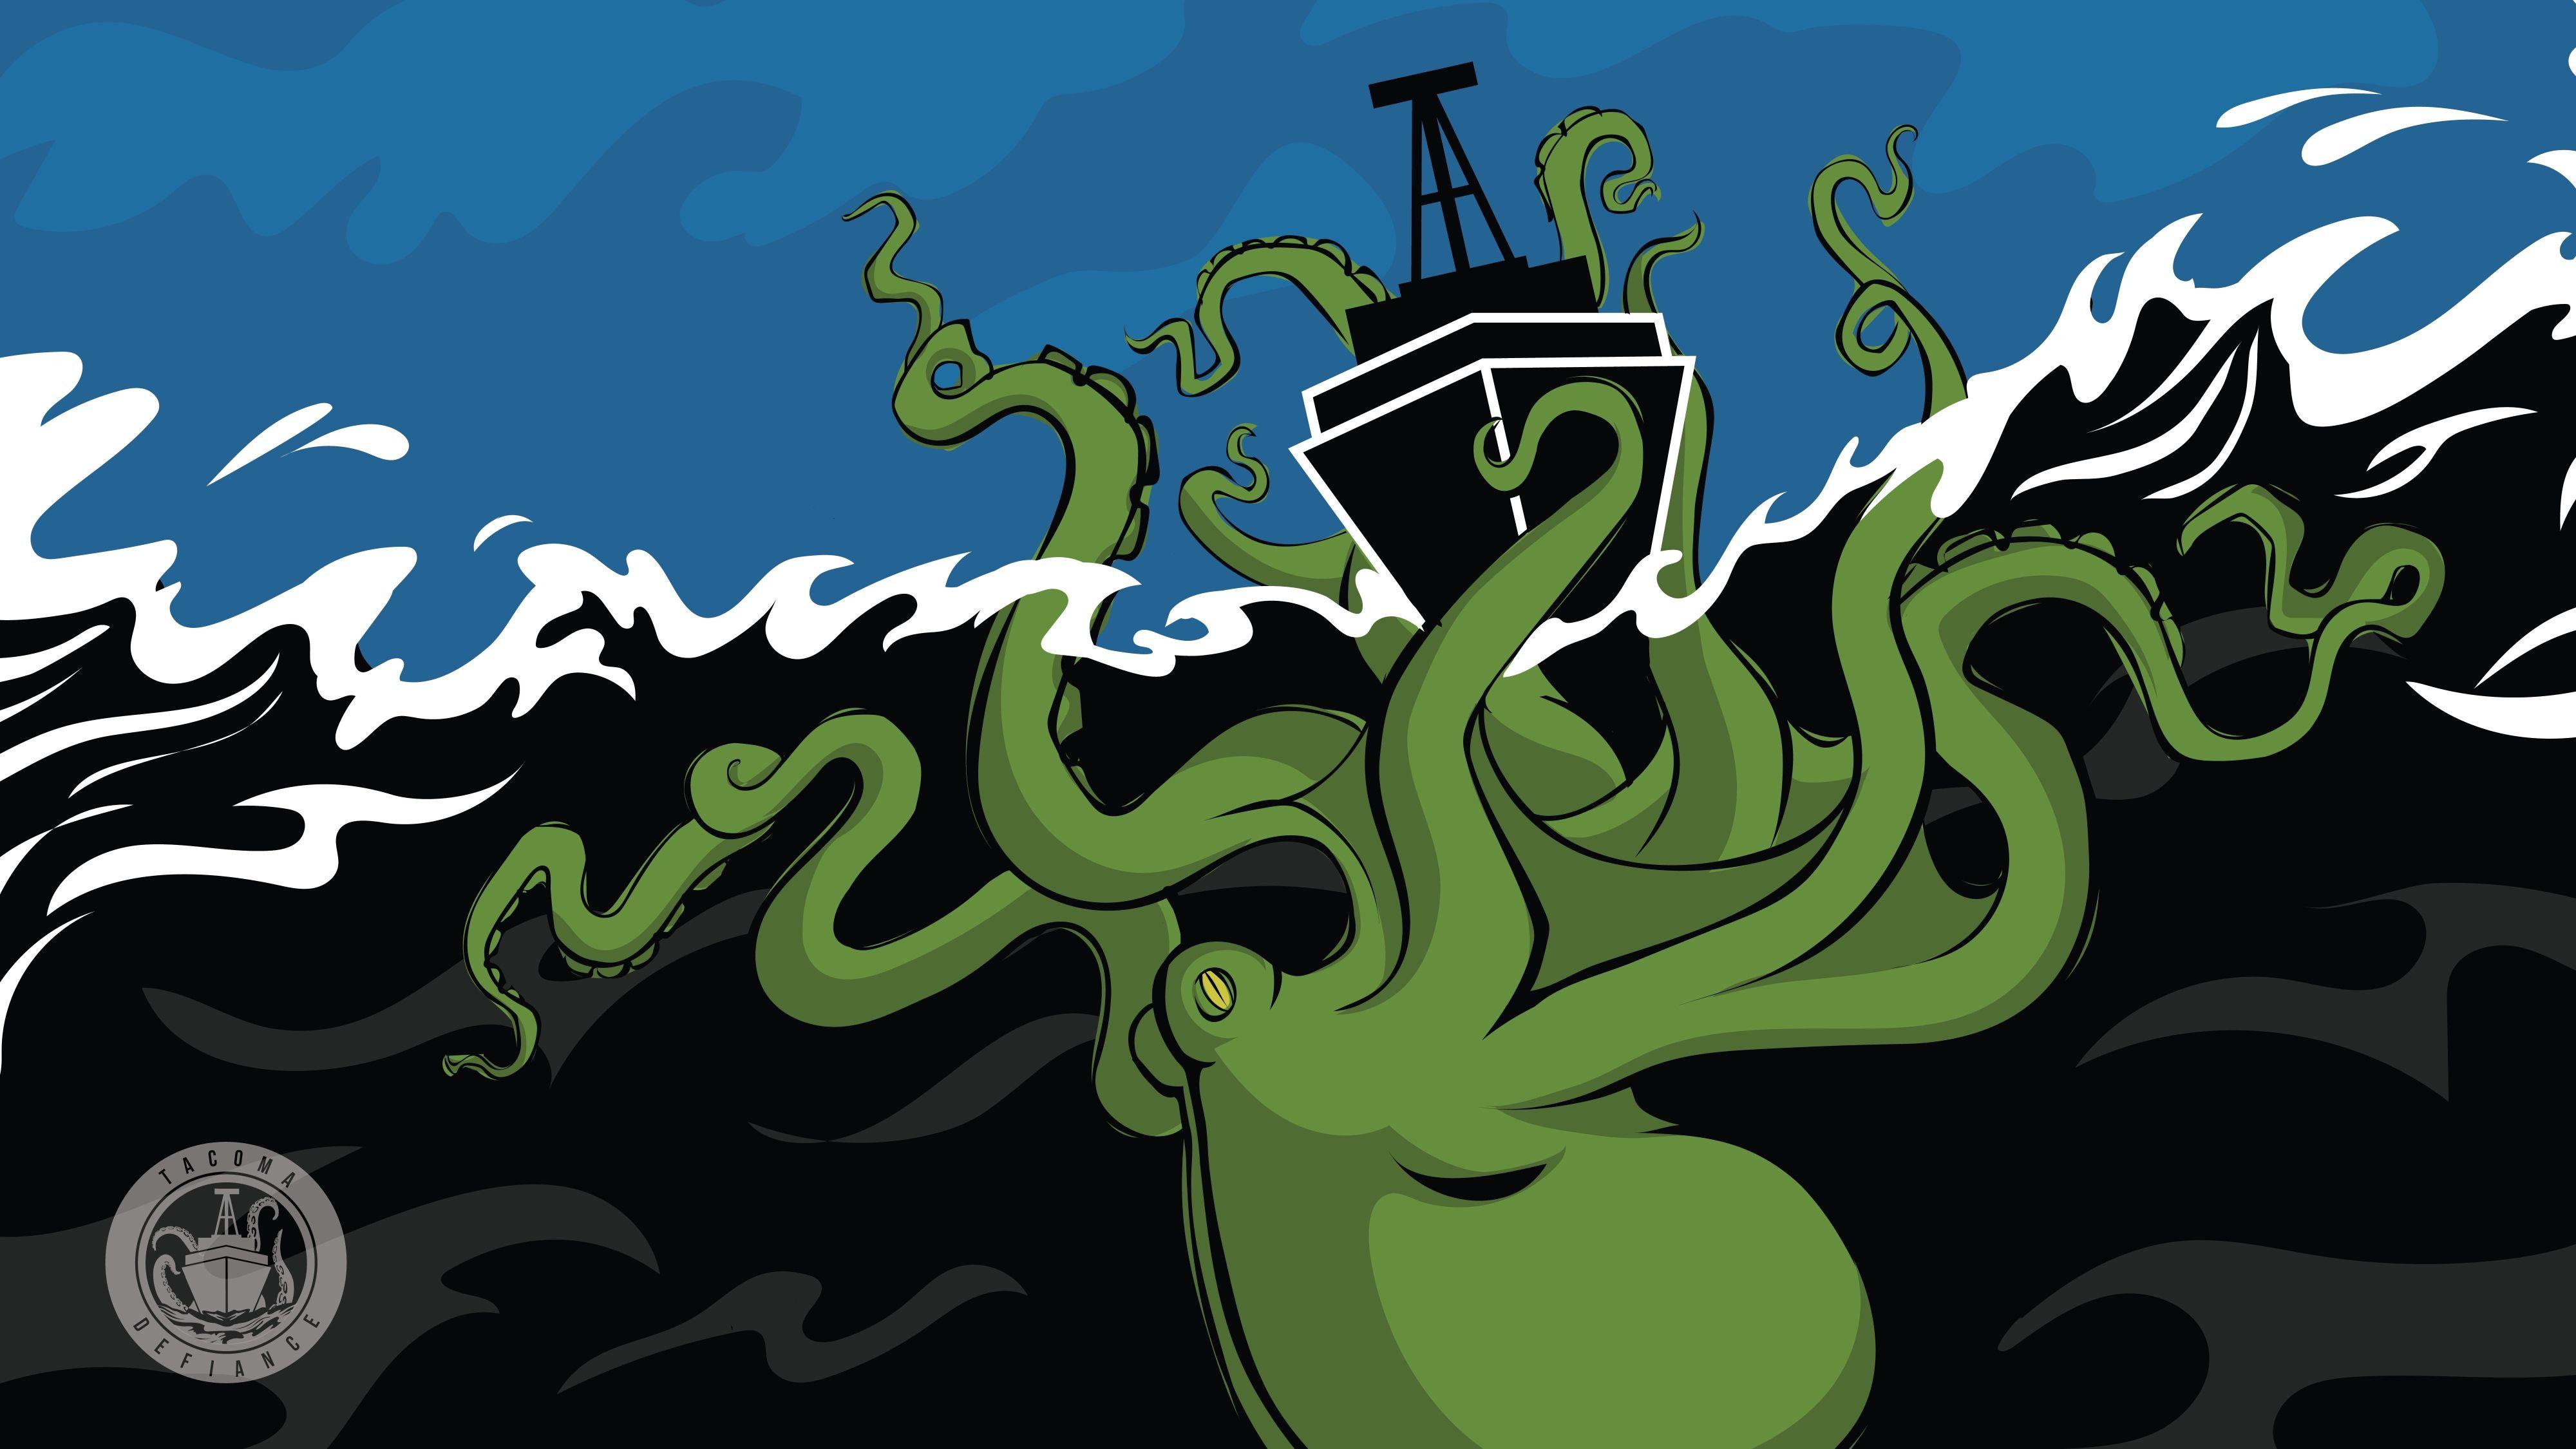 Defiance Logo - Tacoma's defiant nautical spirit